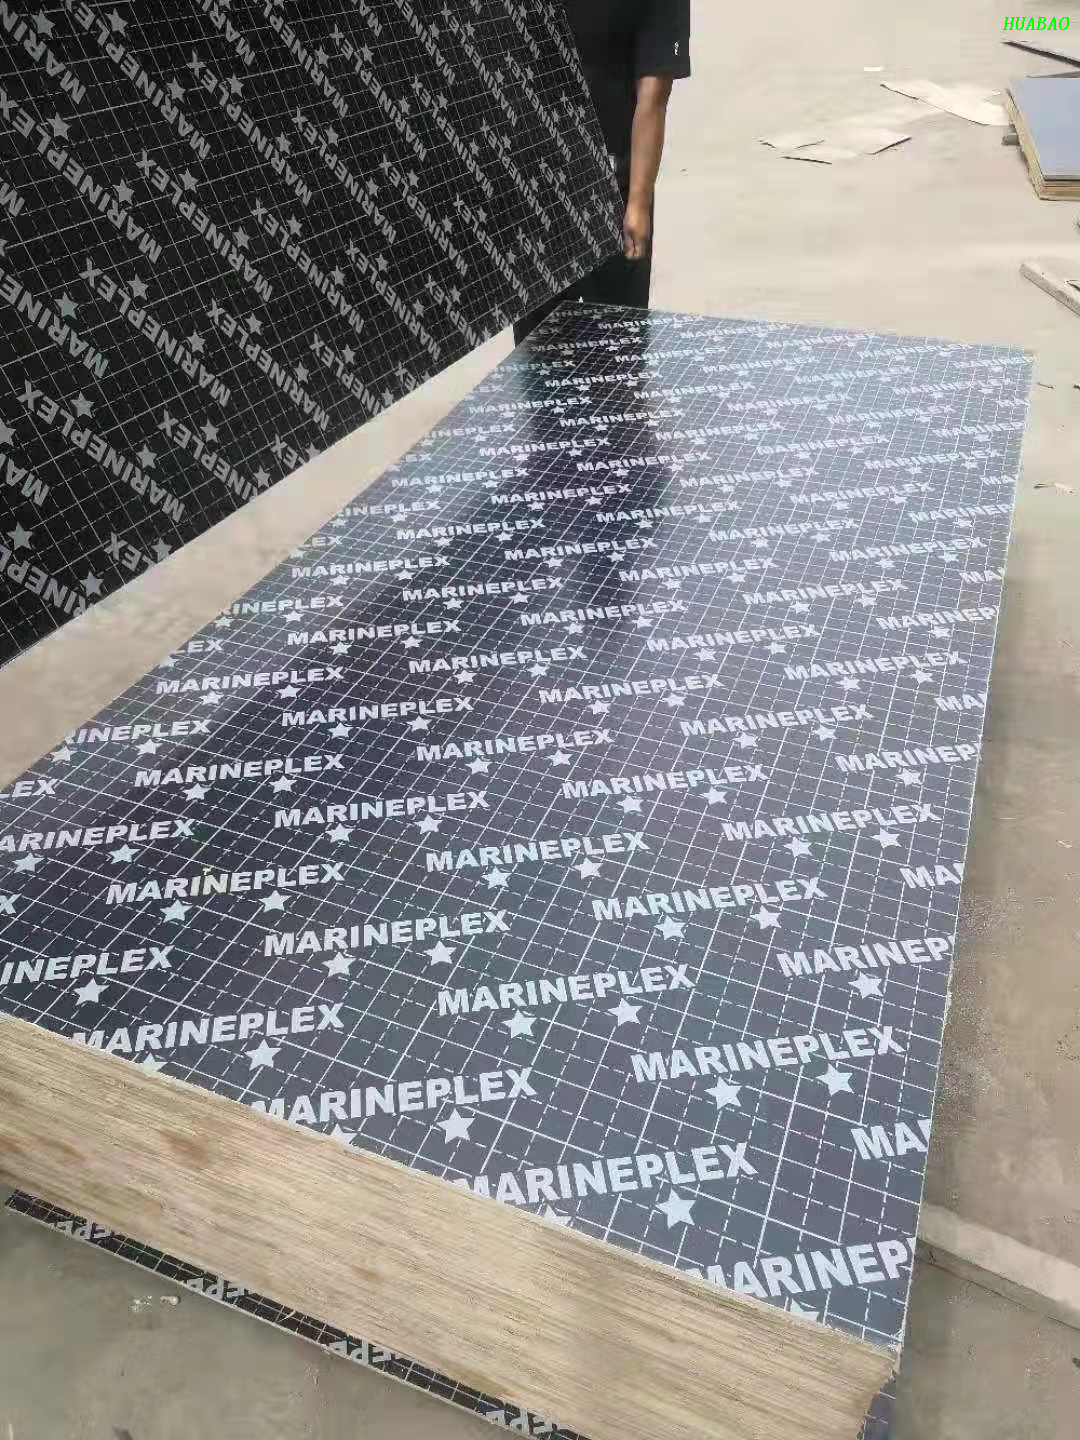 18mm Marineplex Film Faced Plywood Poplar Core for Middel-East Markets